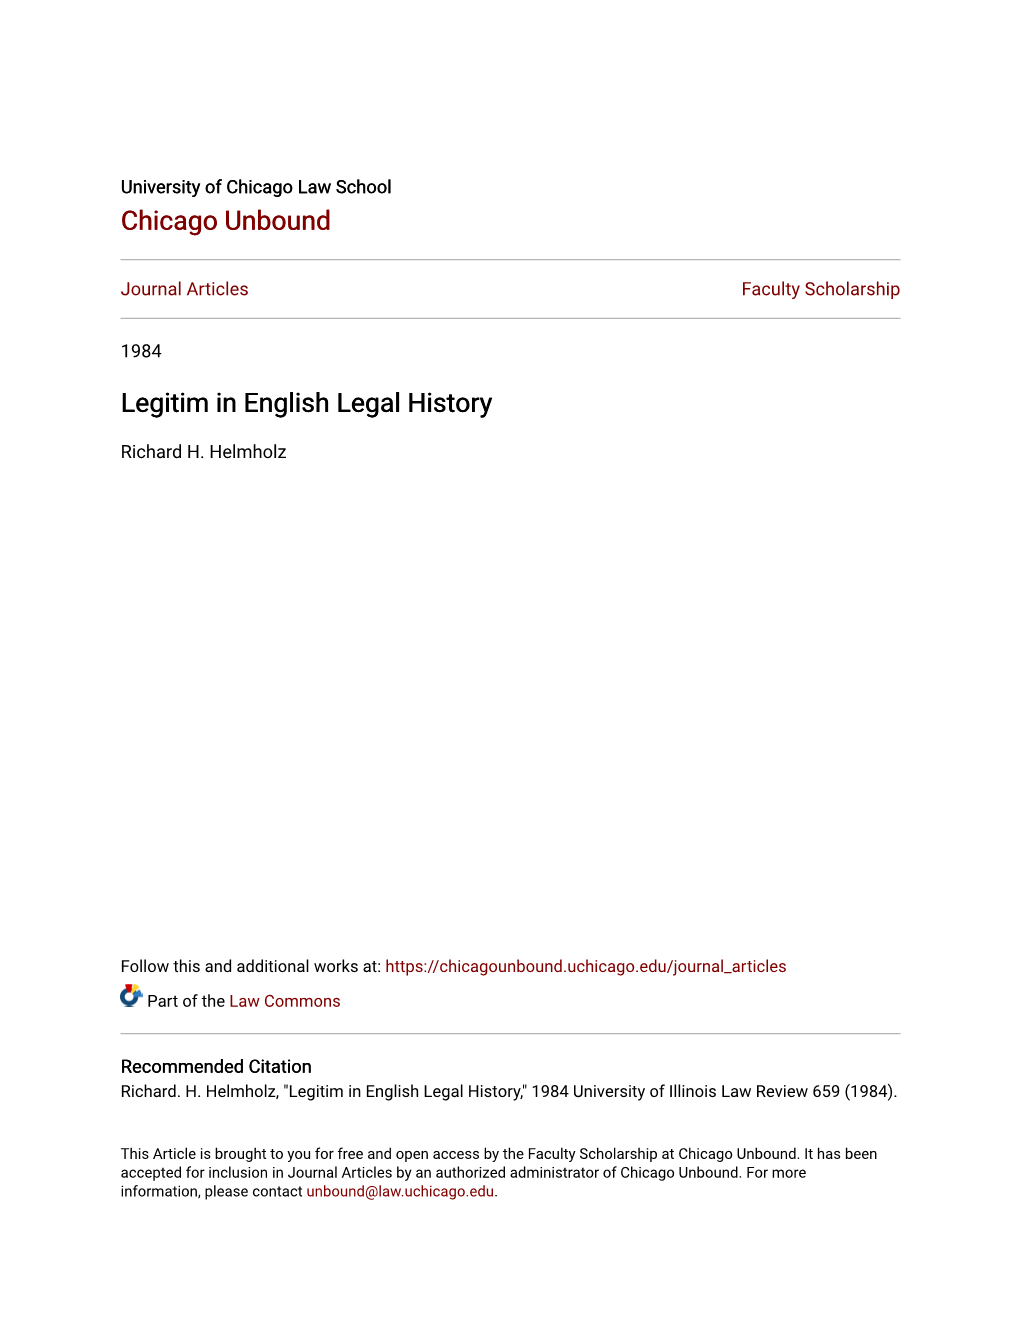 Legitim in English Legal History